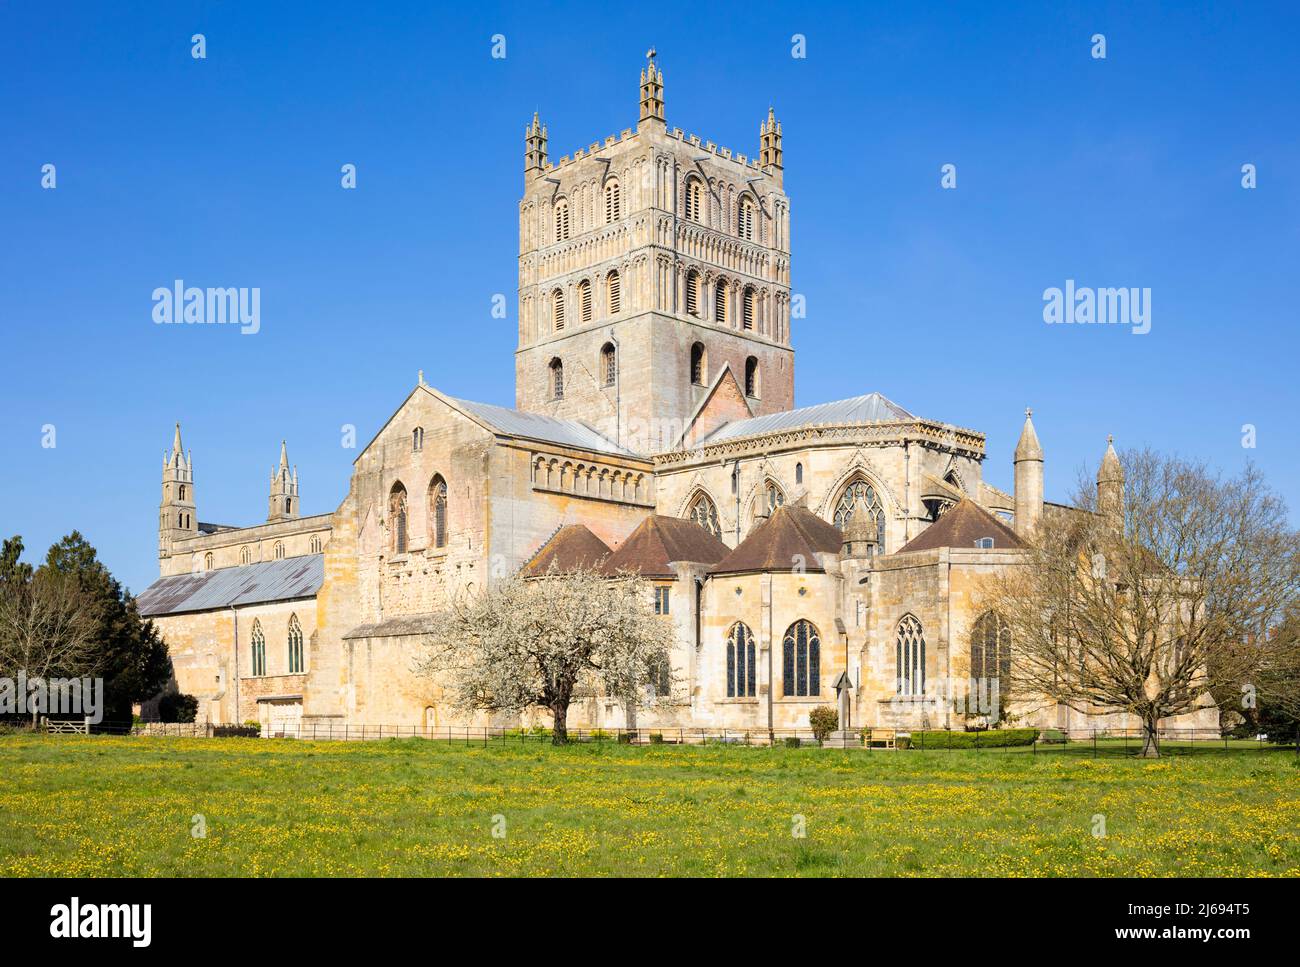 Tewkesbury Abbey (The Abbey Church of St. Mary the Virgin), Tewkesbury, Gloucestershire, England, United Kingdom Stock Photo